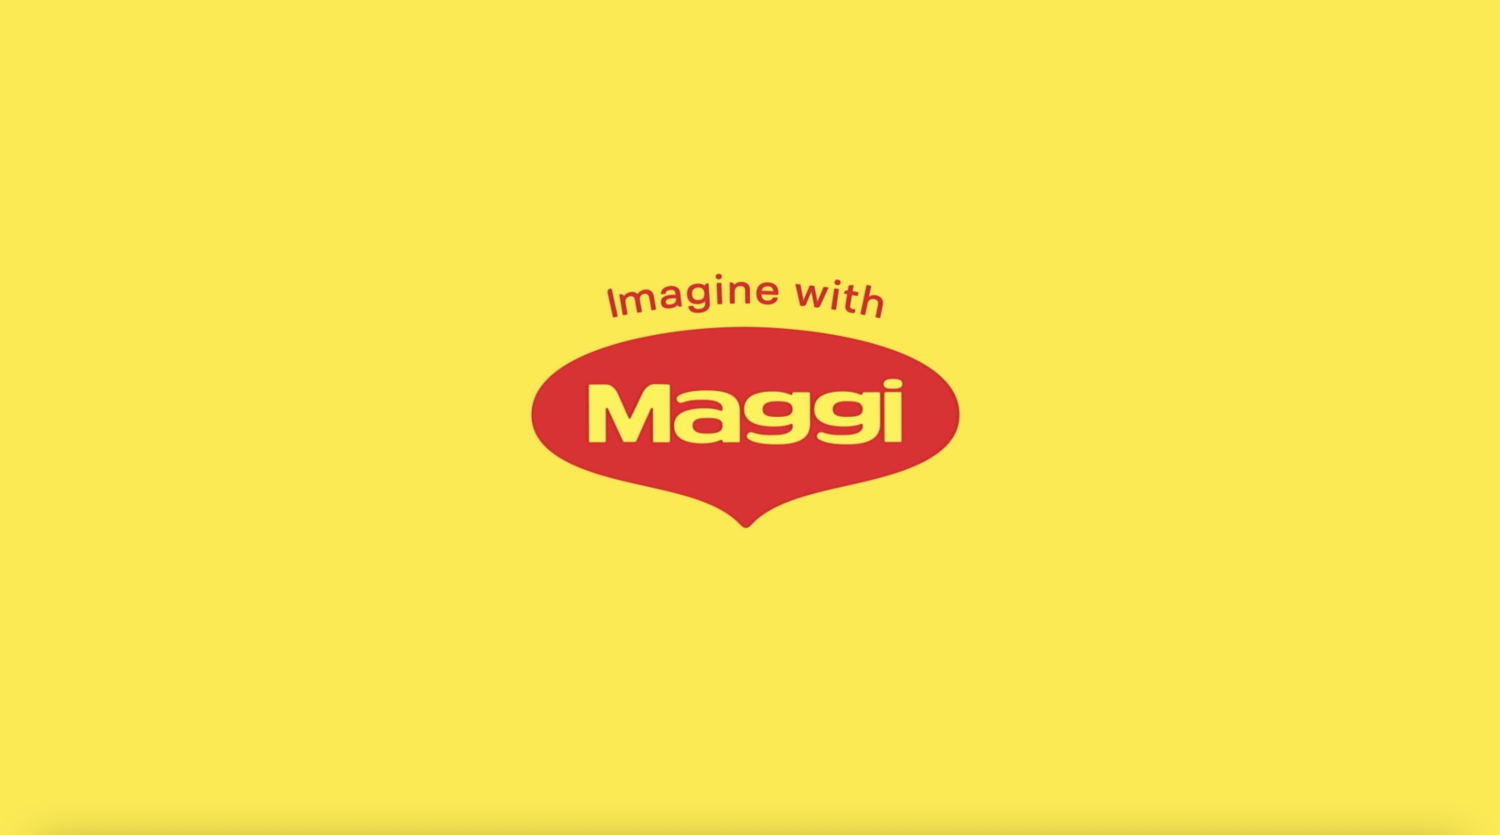 Maggi Image